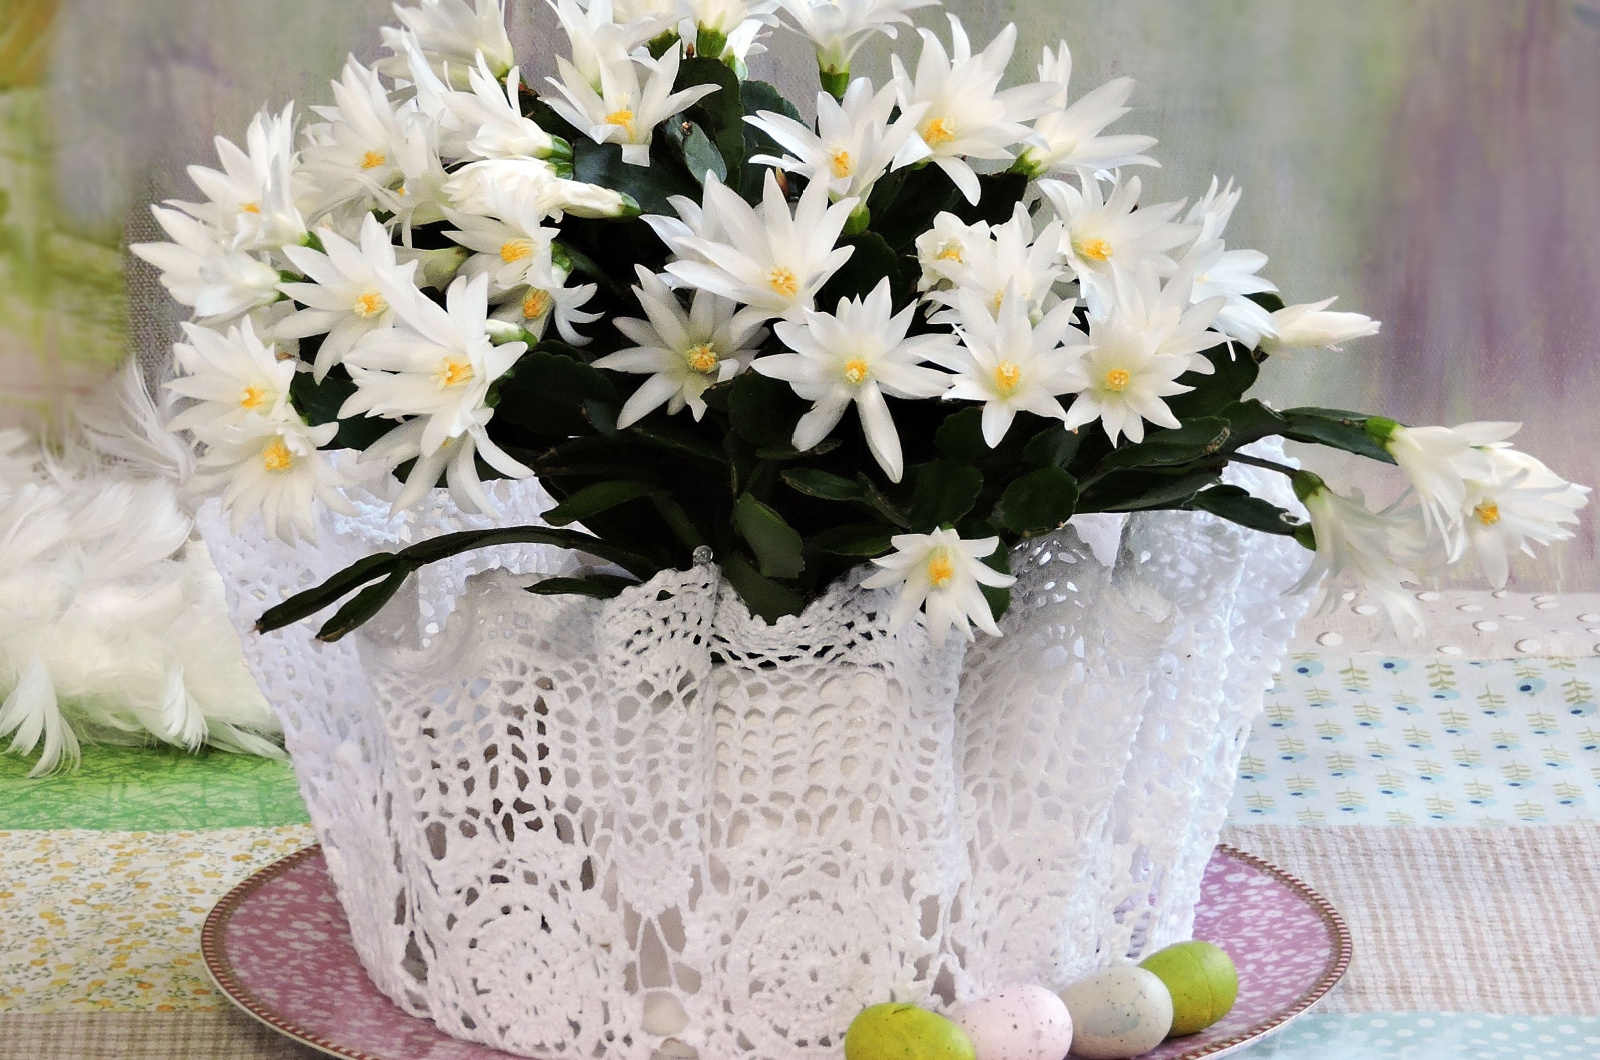 White Easter cactus